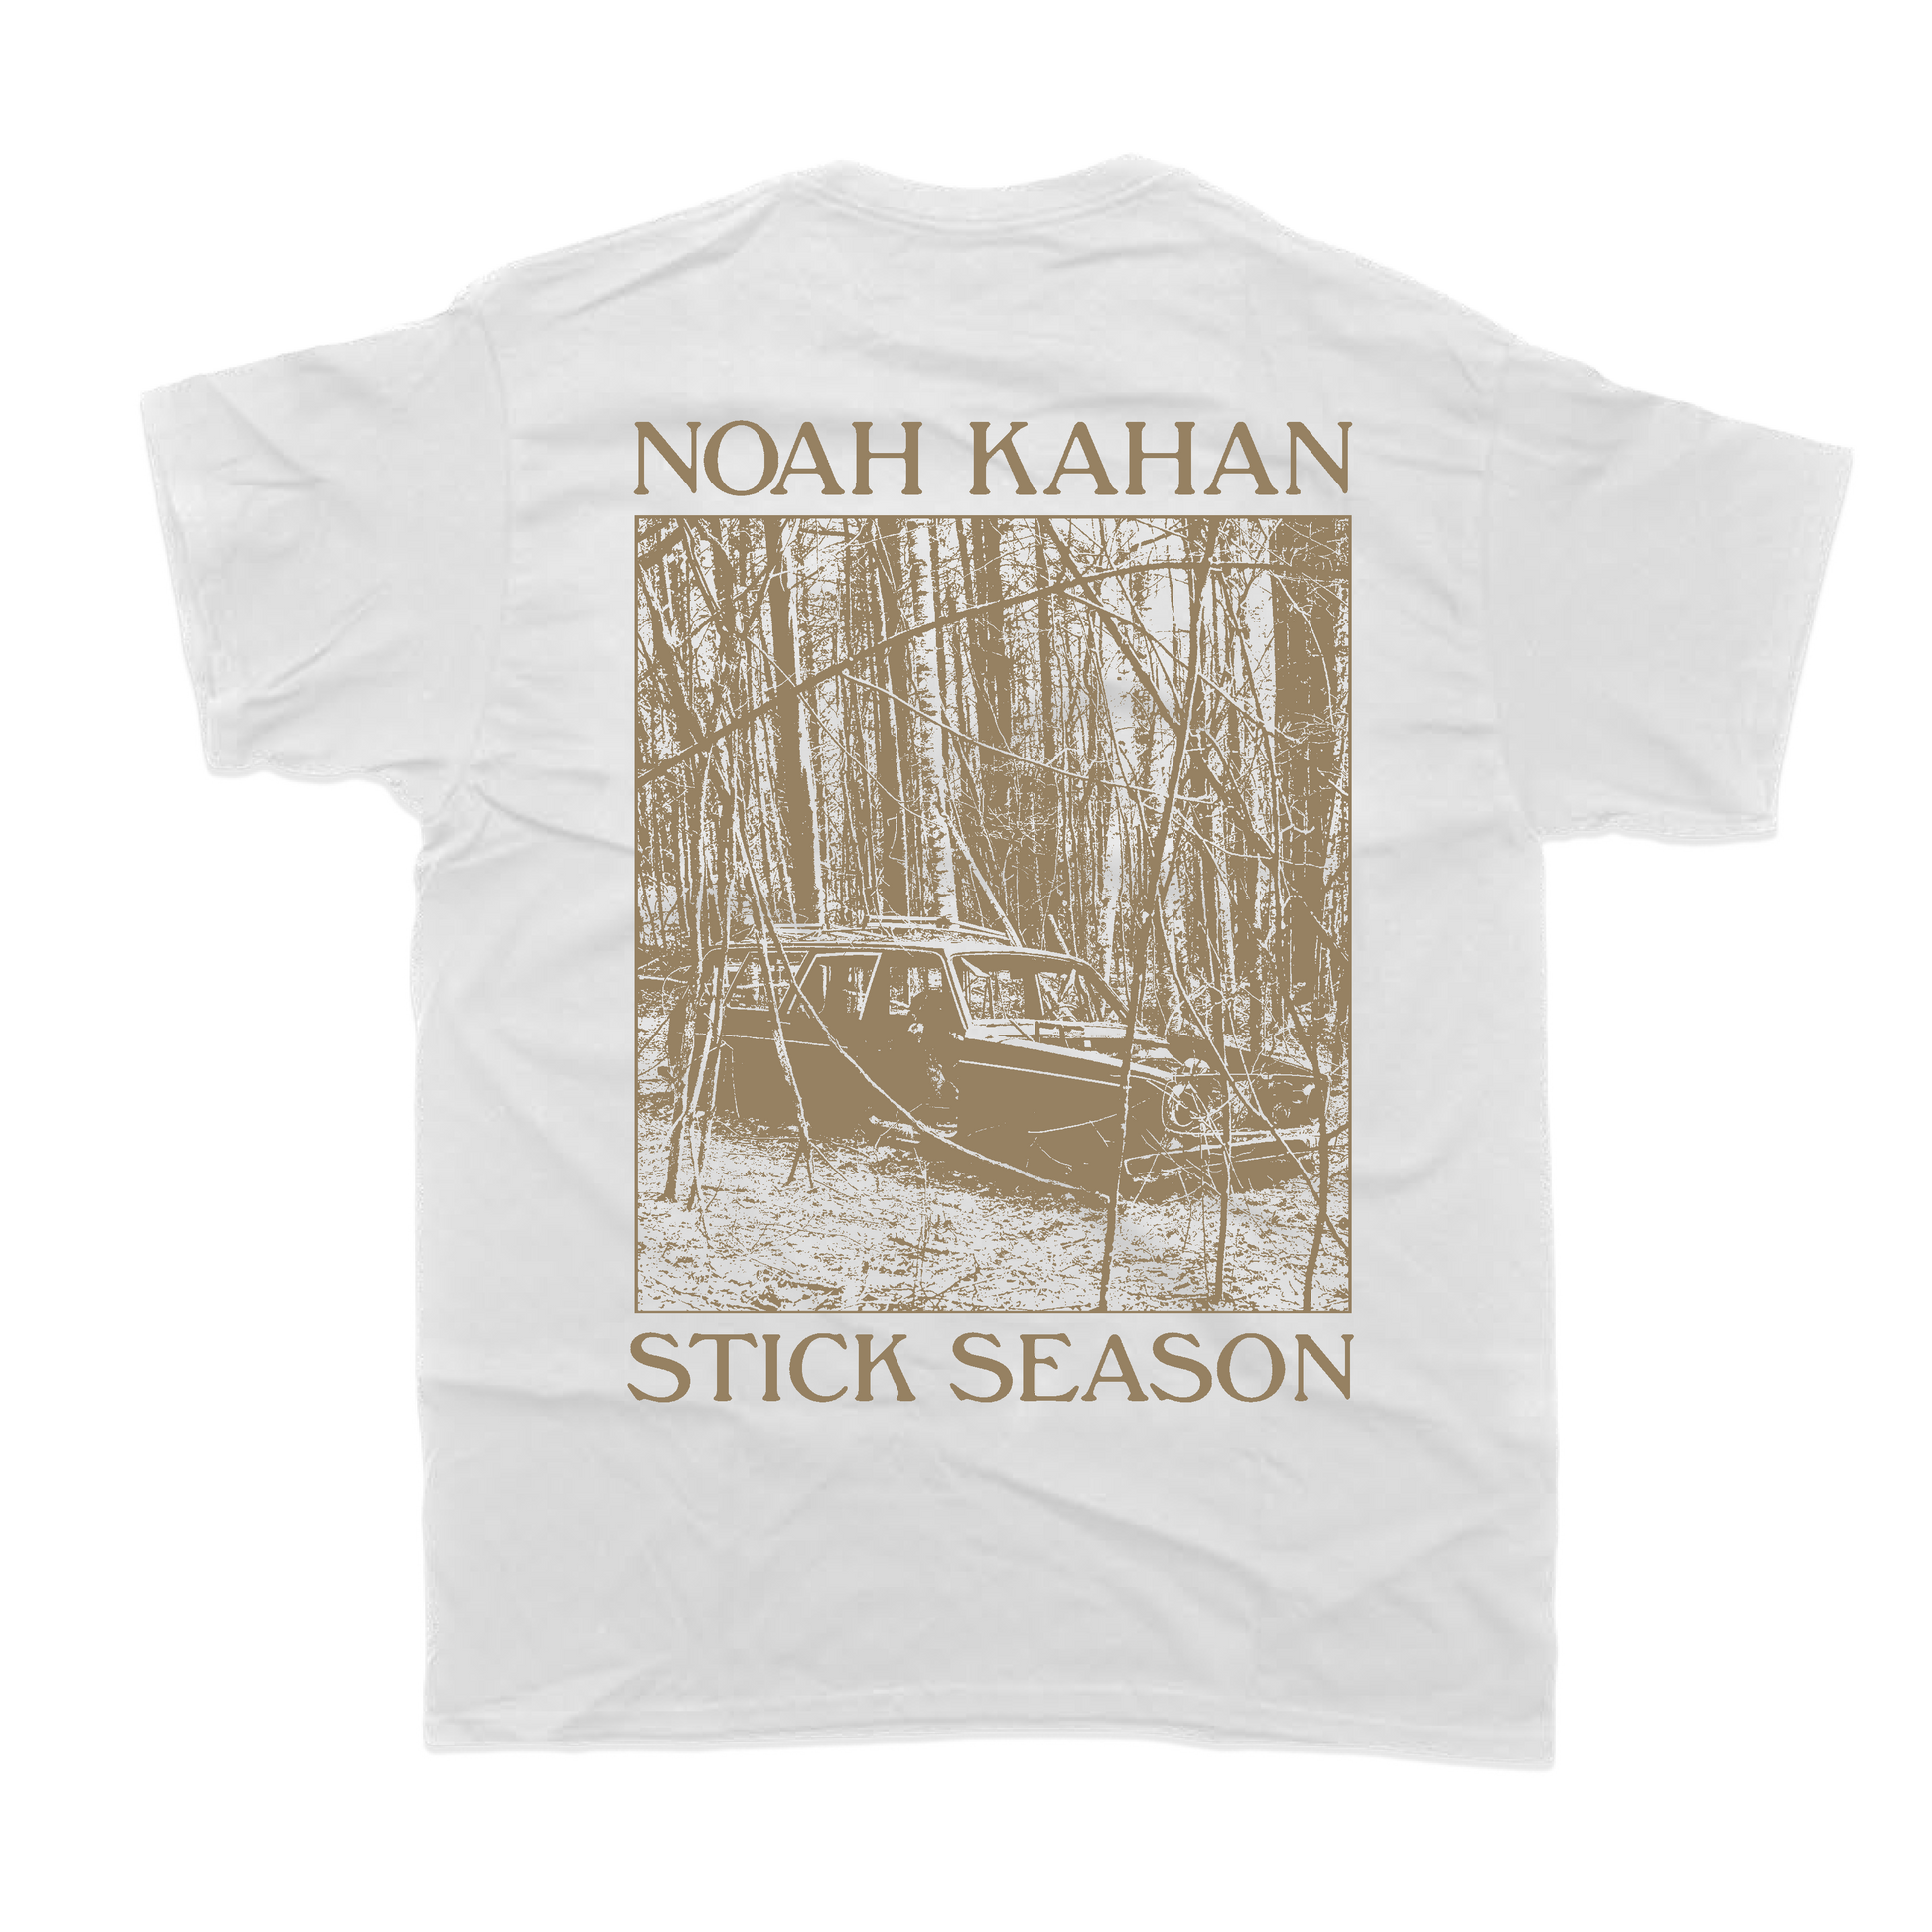 Noah Kahan Stick Season white tee